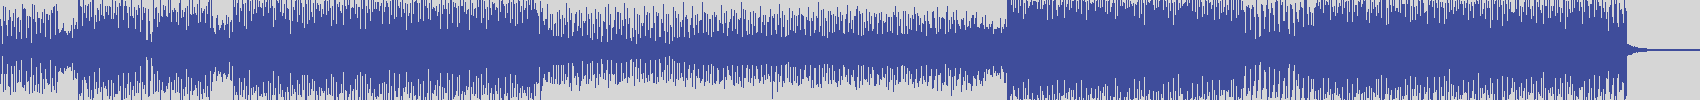 suxess [SX005] Dyson Kellerman - Get You [Radio Edit] audio wave form